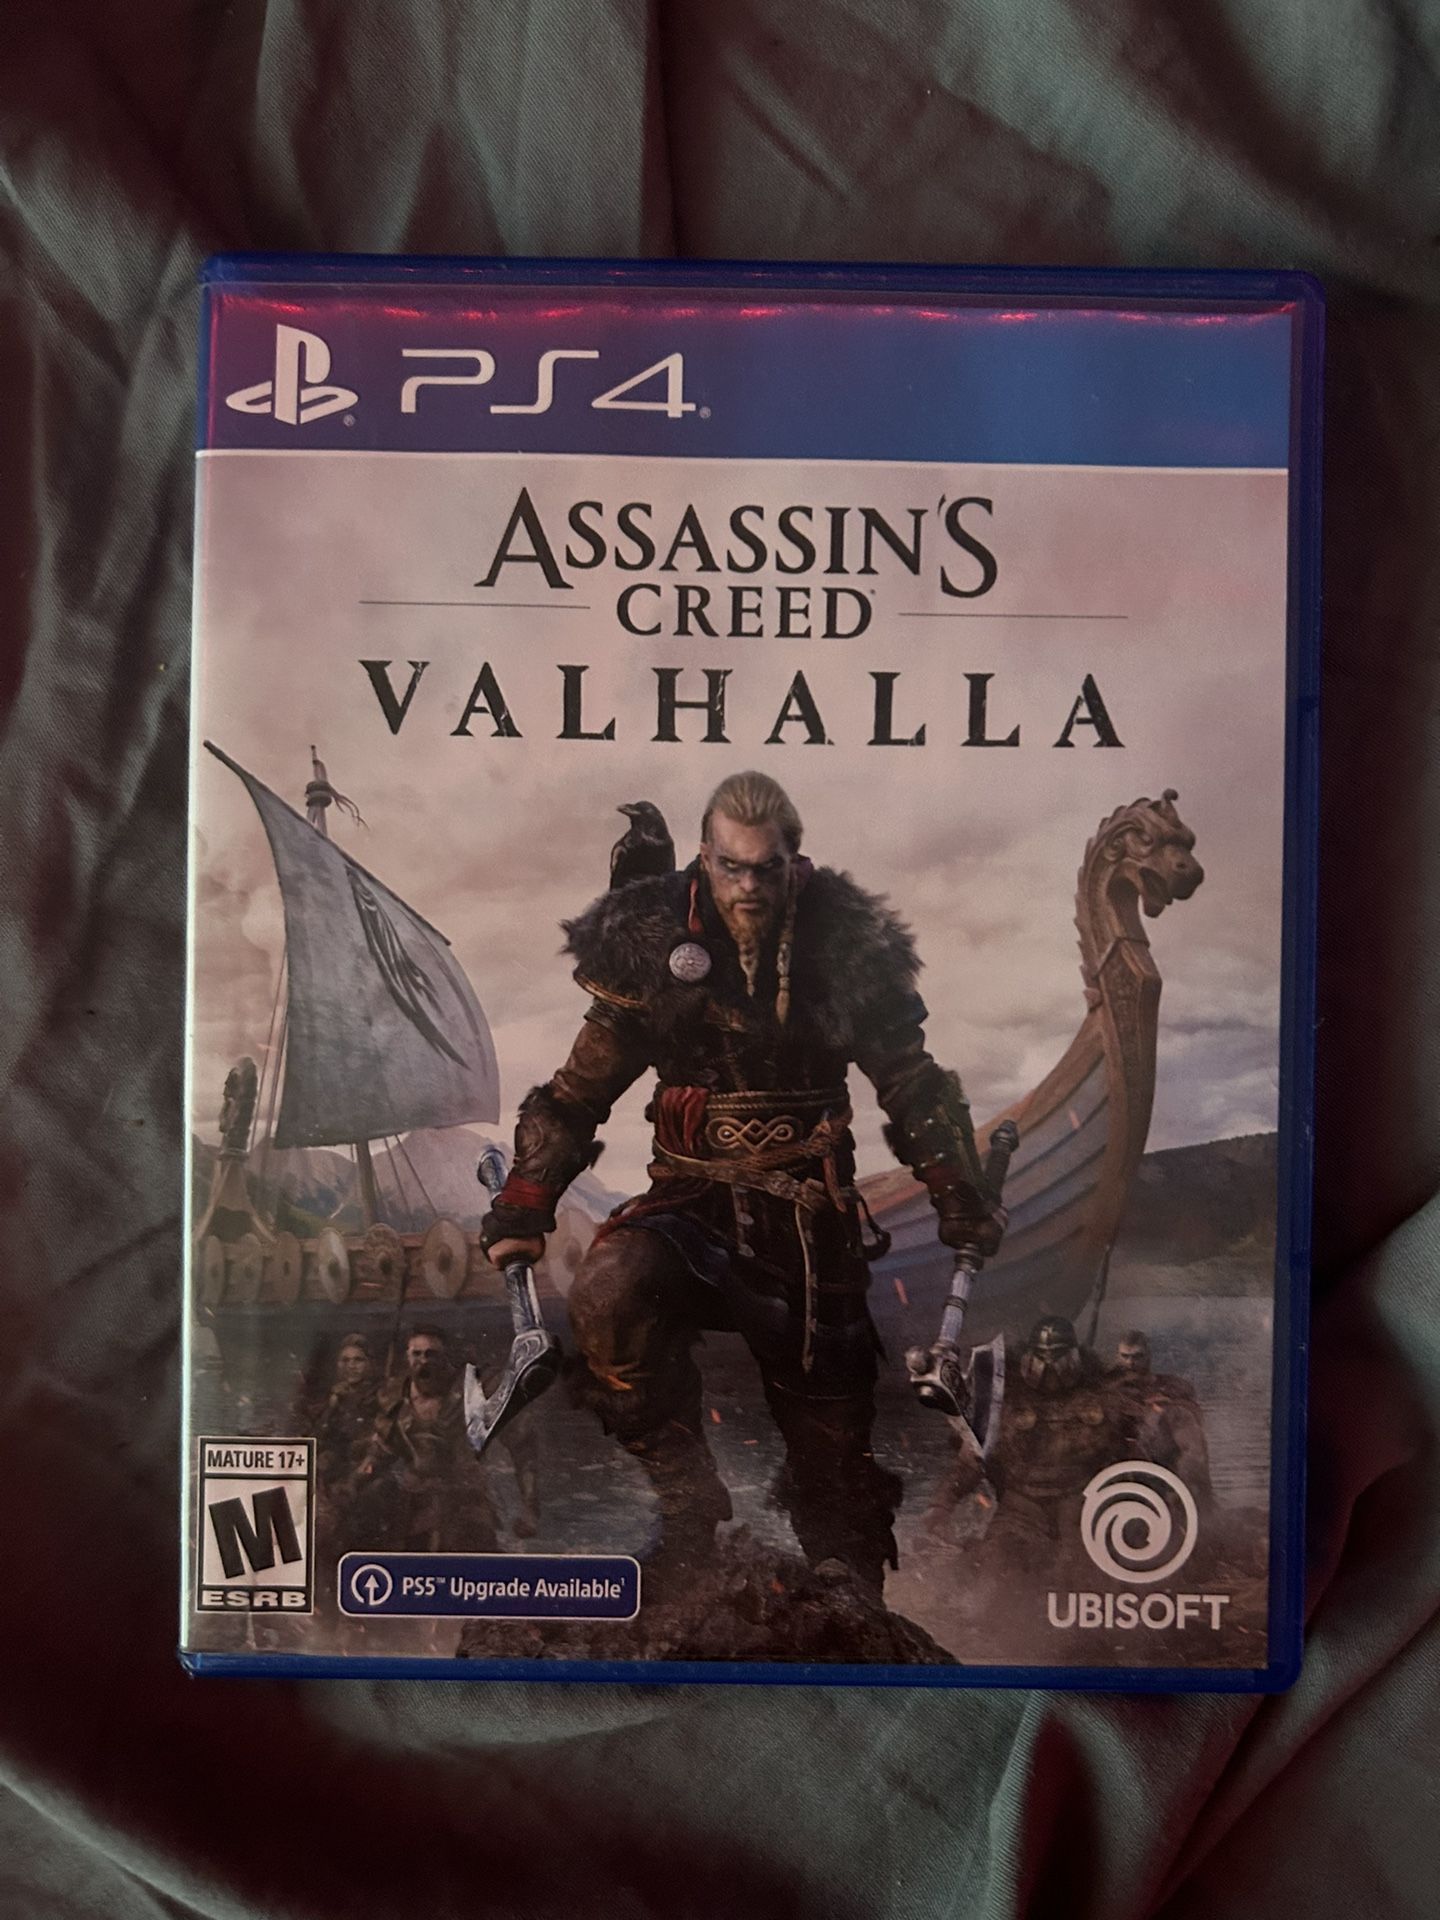 Assassins Creed Valhalla on PS4